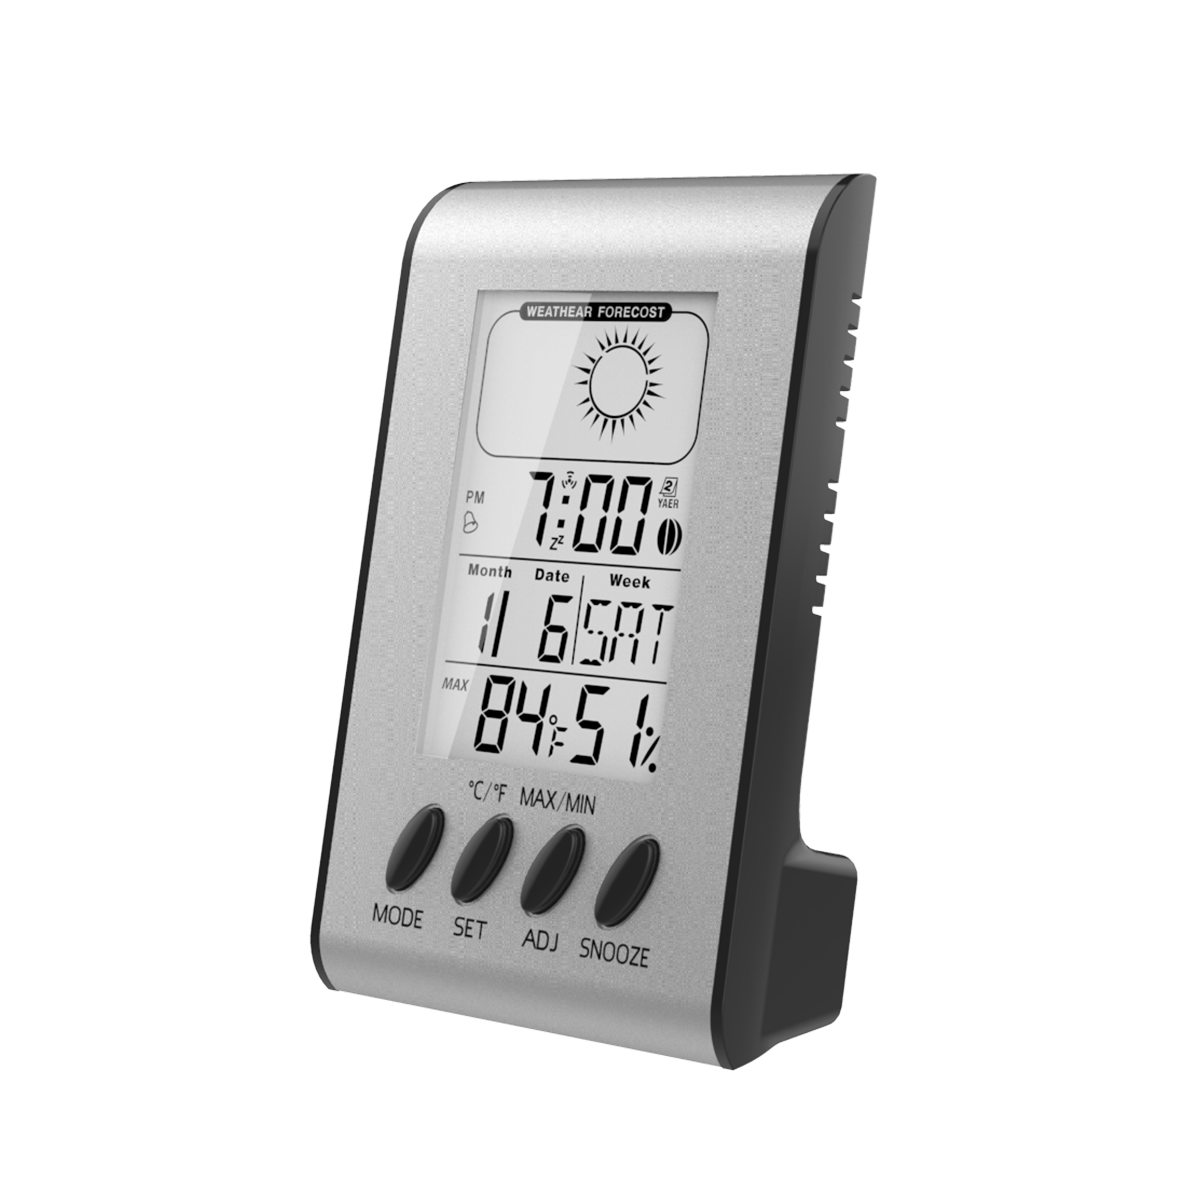 Digital Thermo-hygrometer